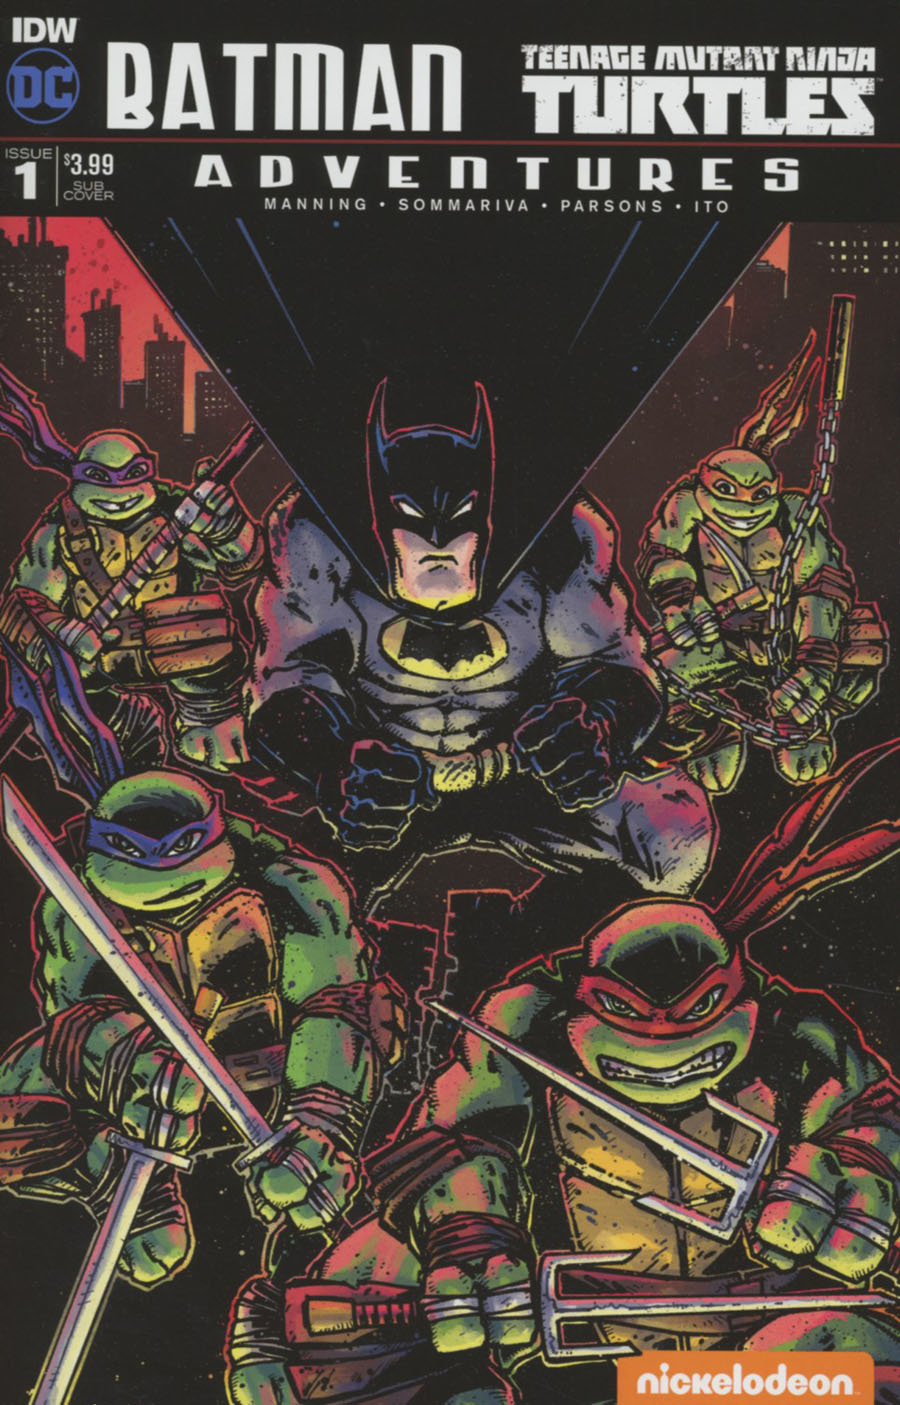 Batman Teenage Mutant Ninja Turtles Adventures #1 Cover C Variant Kevin Eastman Subscription Cover